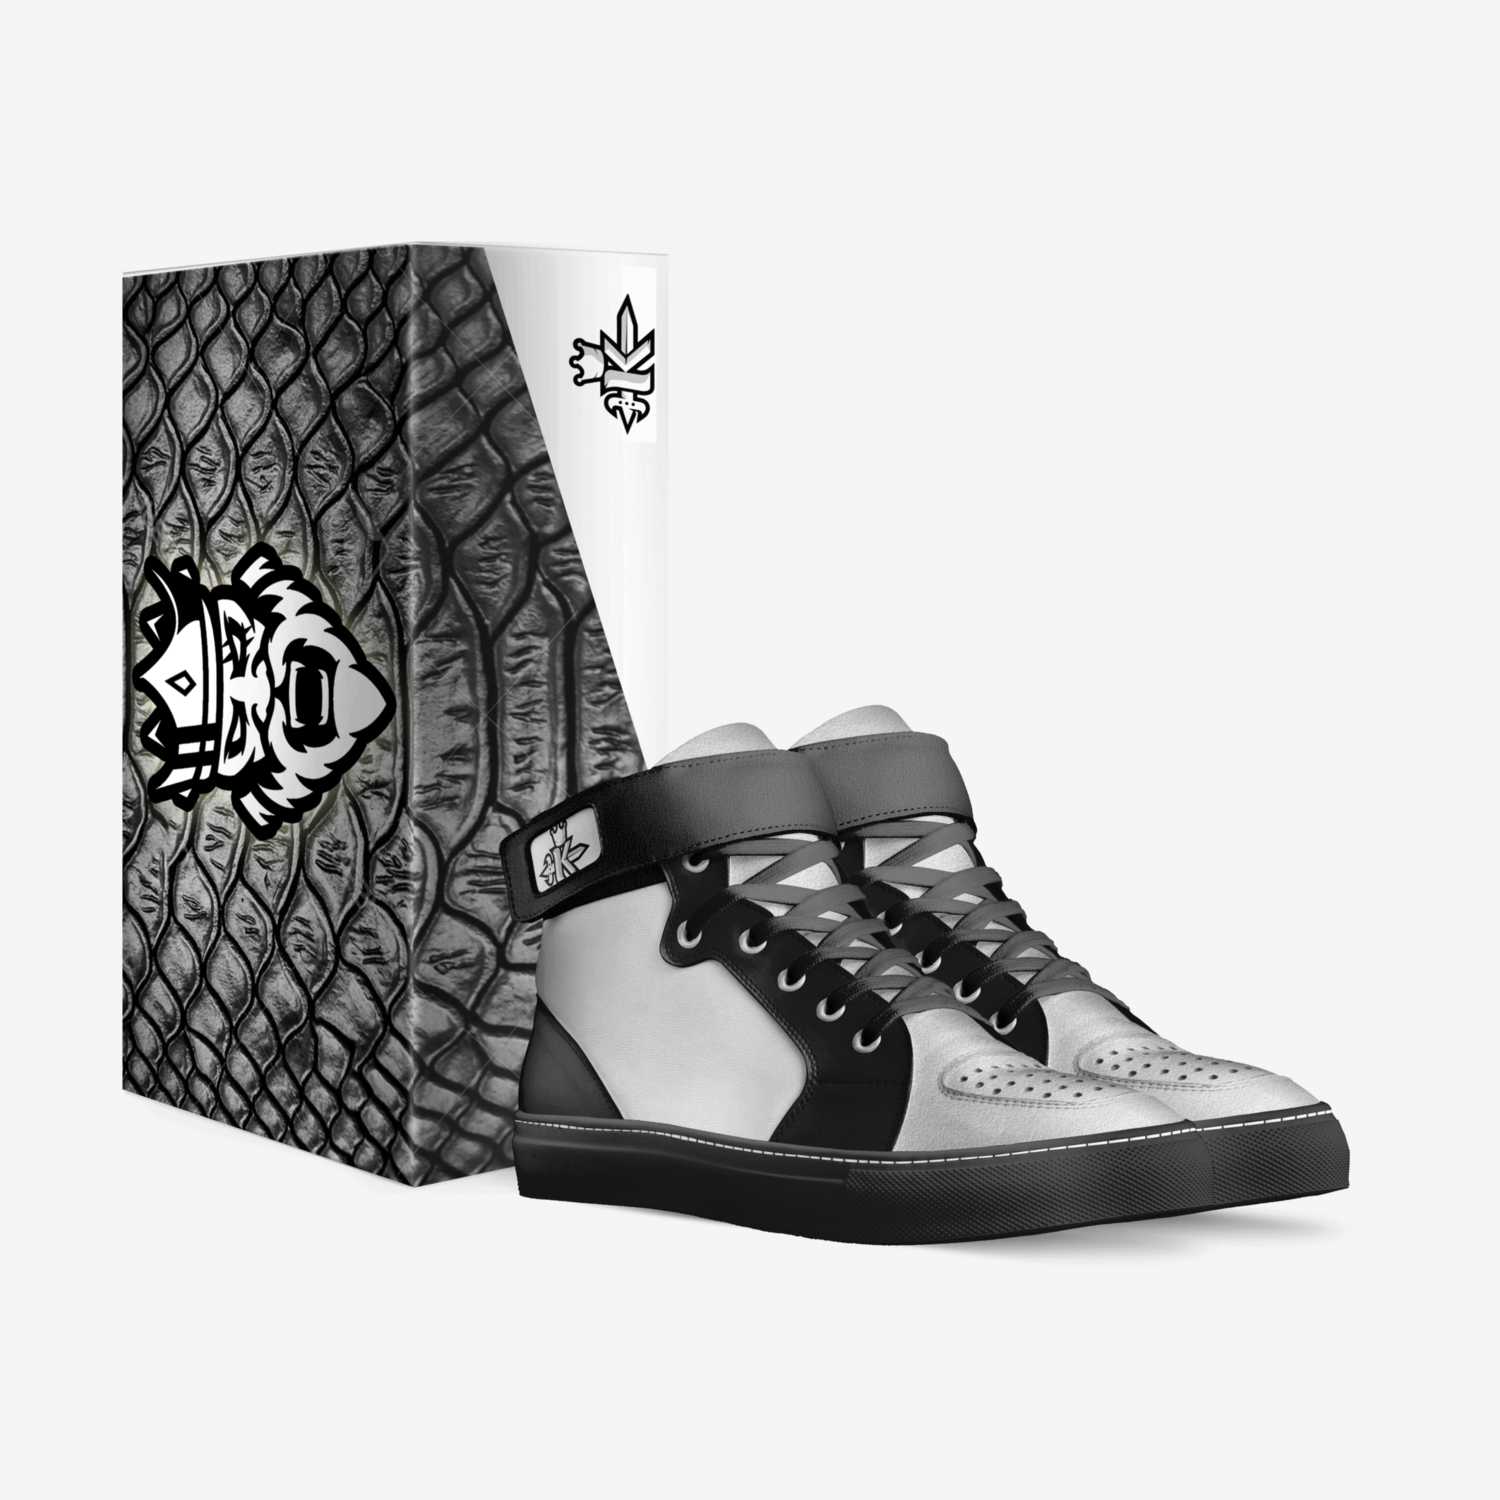 Kingsmen custom made in Italy shoes by Jay Jarafa | Box view